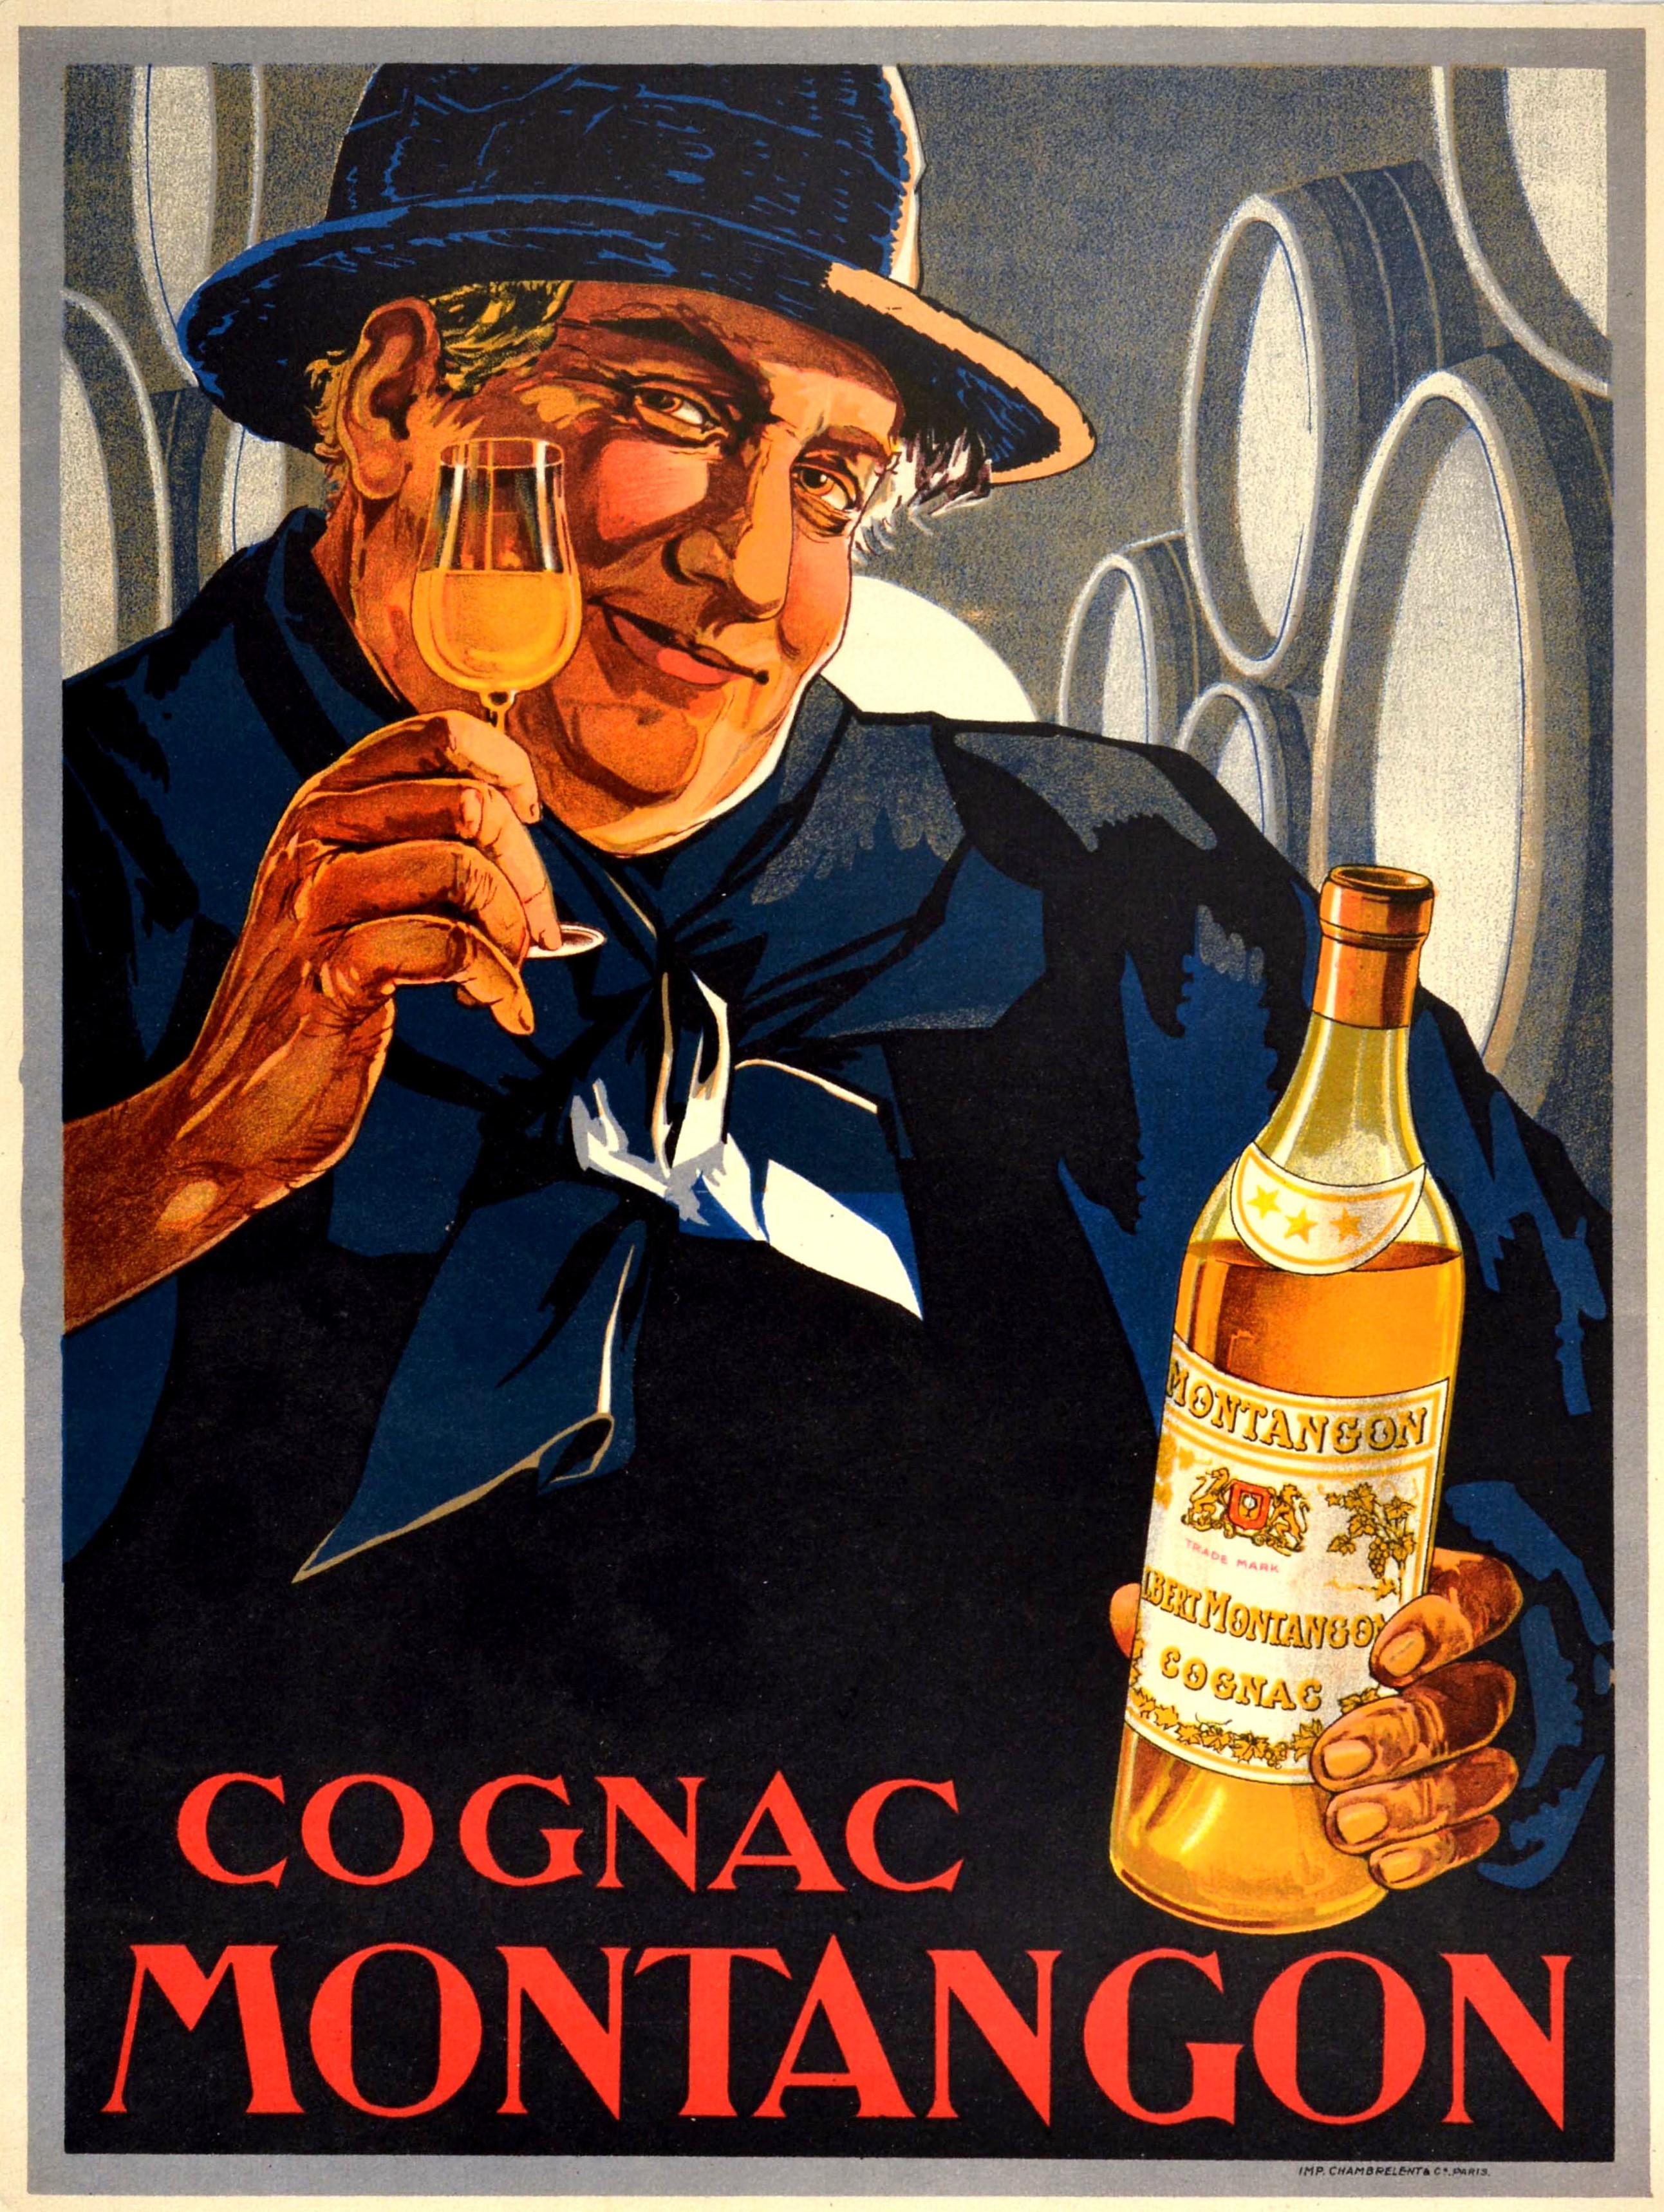 Unknown Print - Original Antique Poster Cognac Montangon France Alcohol Drink Advertising Art